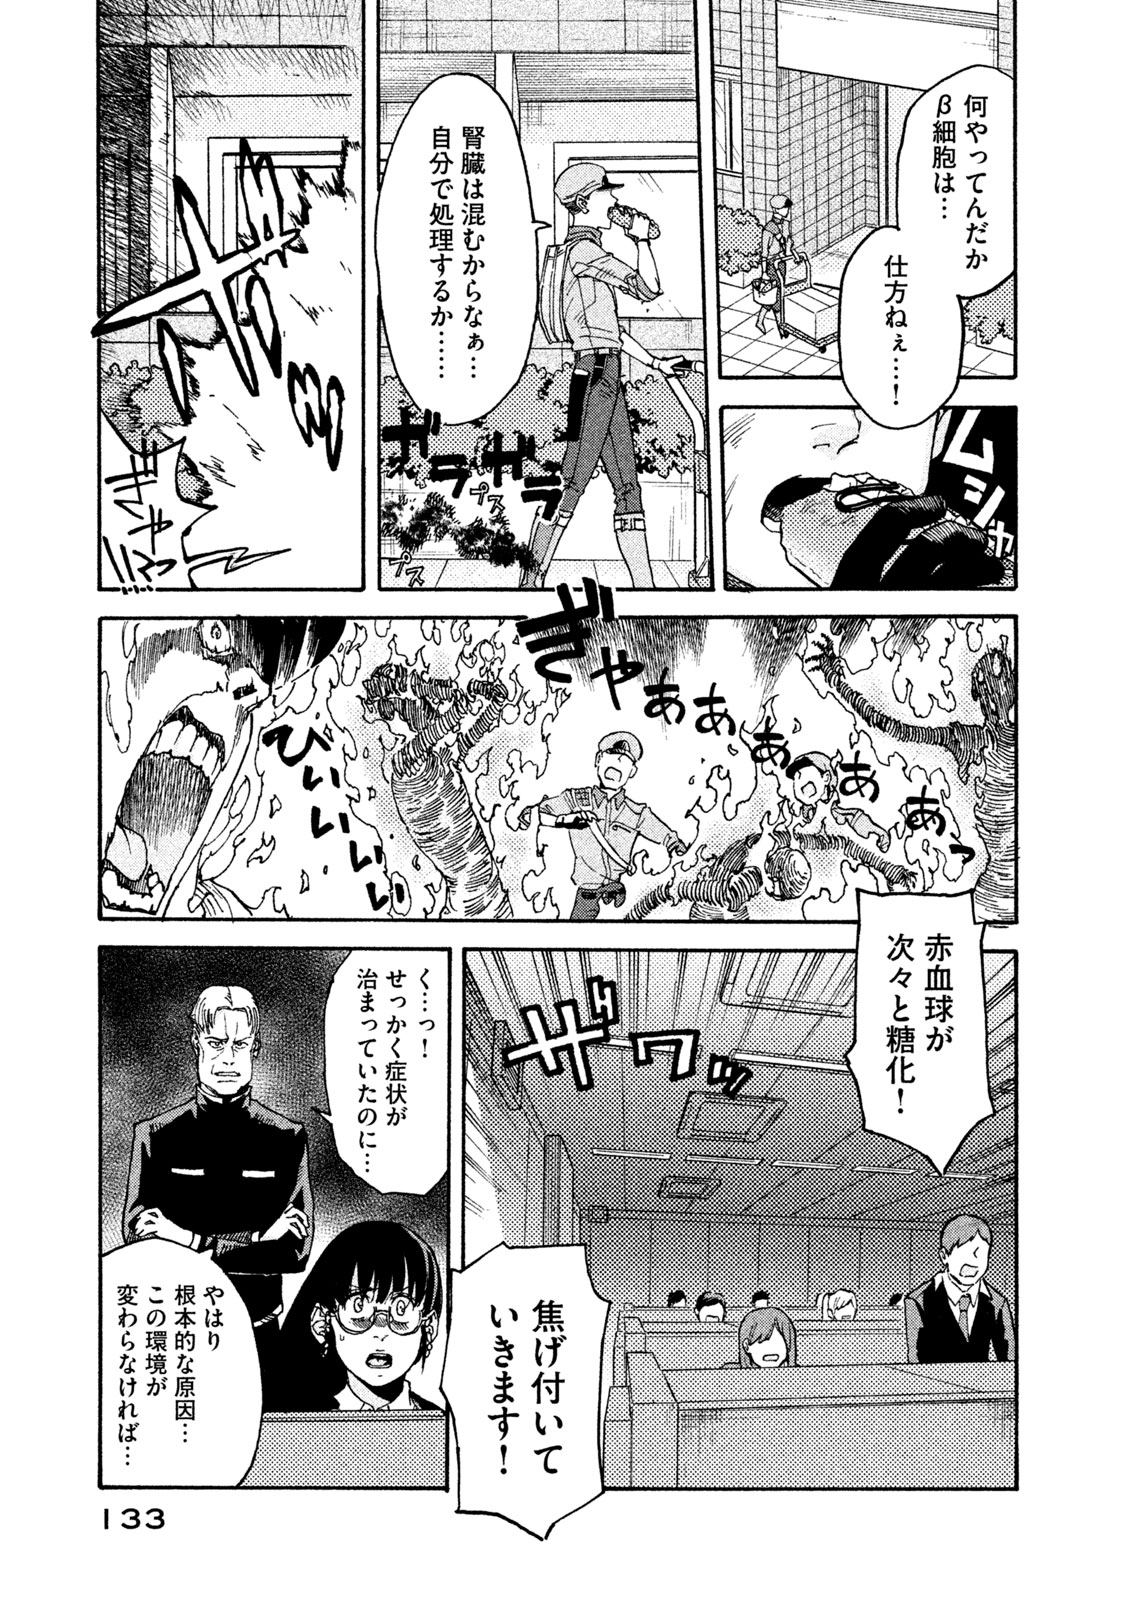 Hataraku Saibou BLACK - Chapter 24 - Page 7